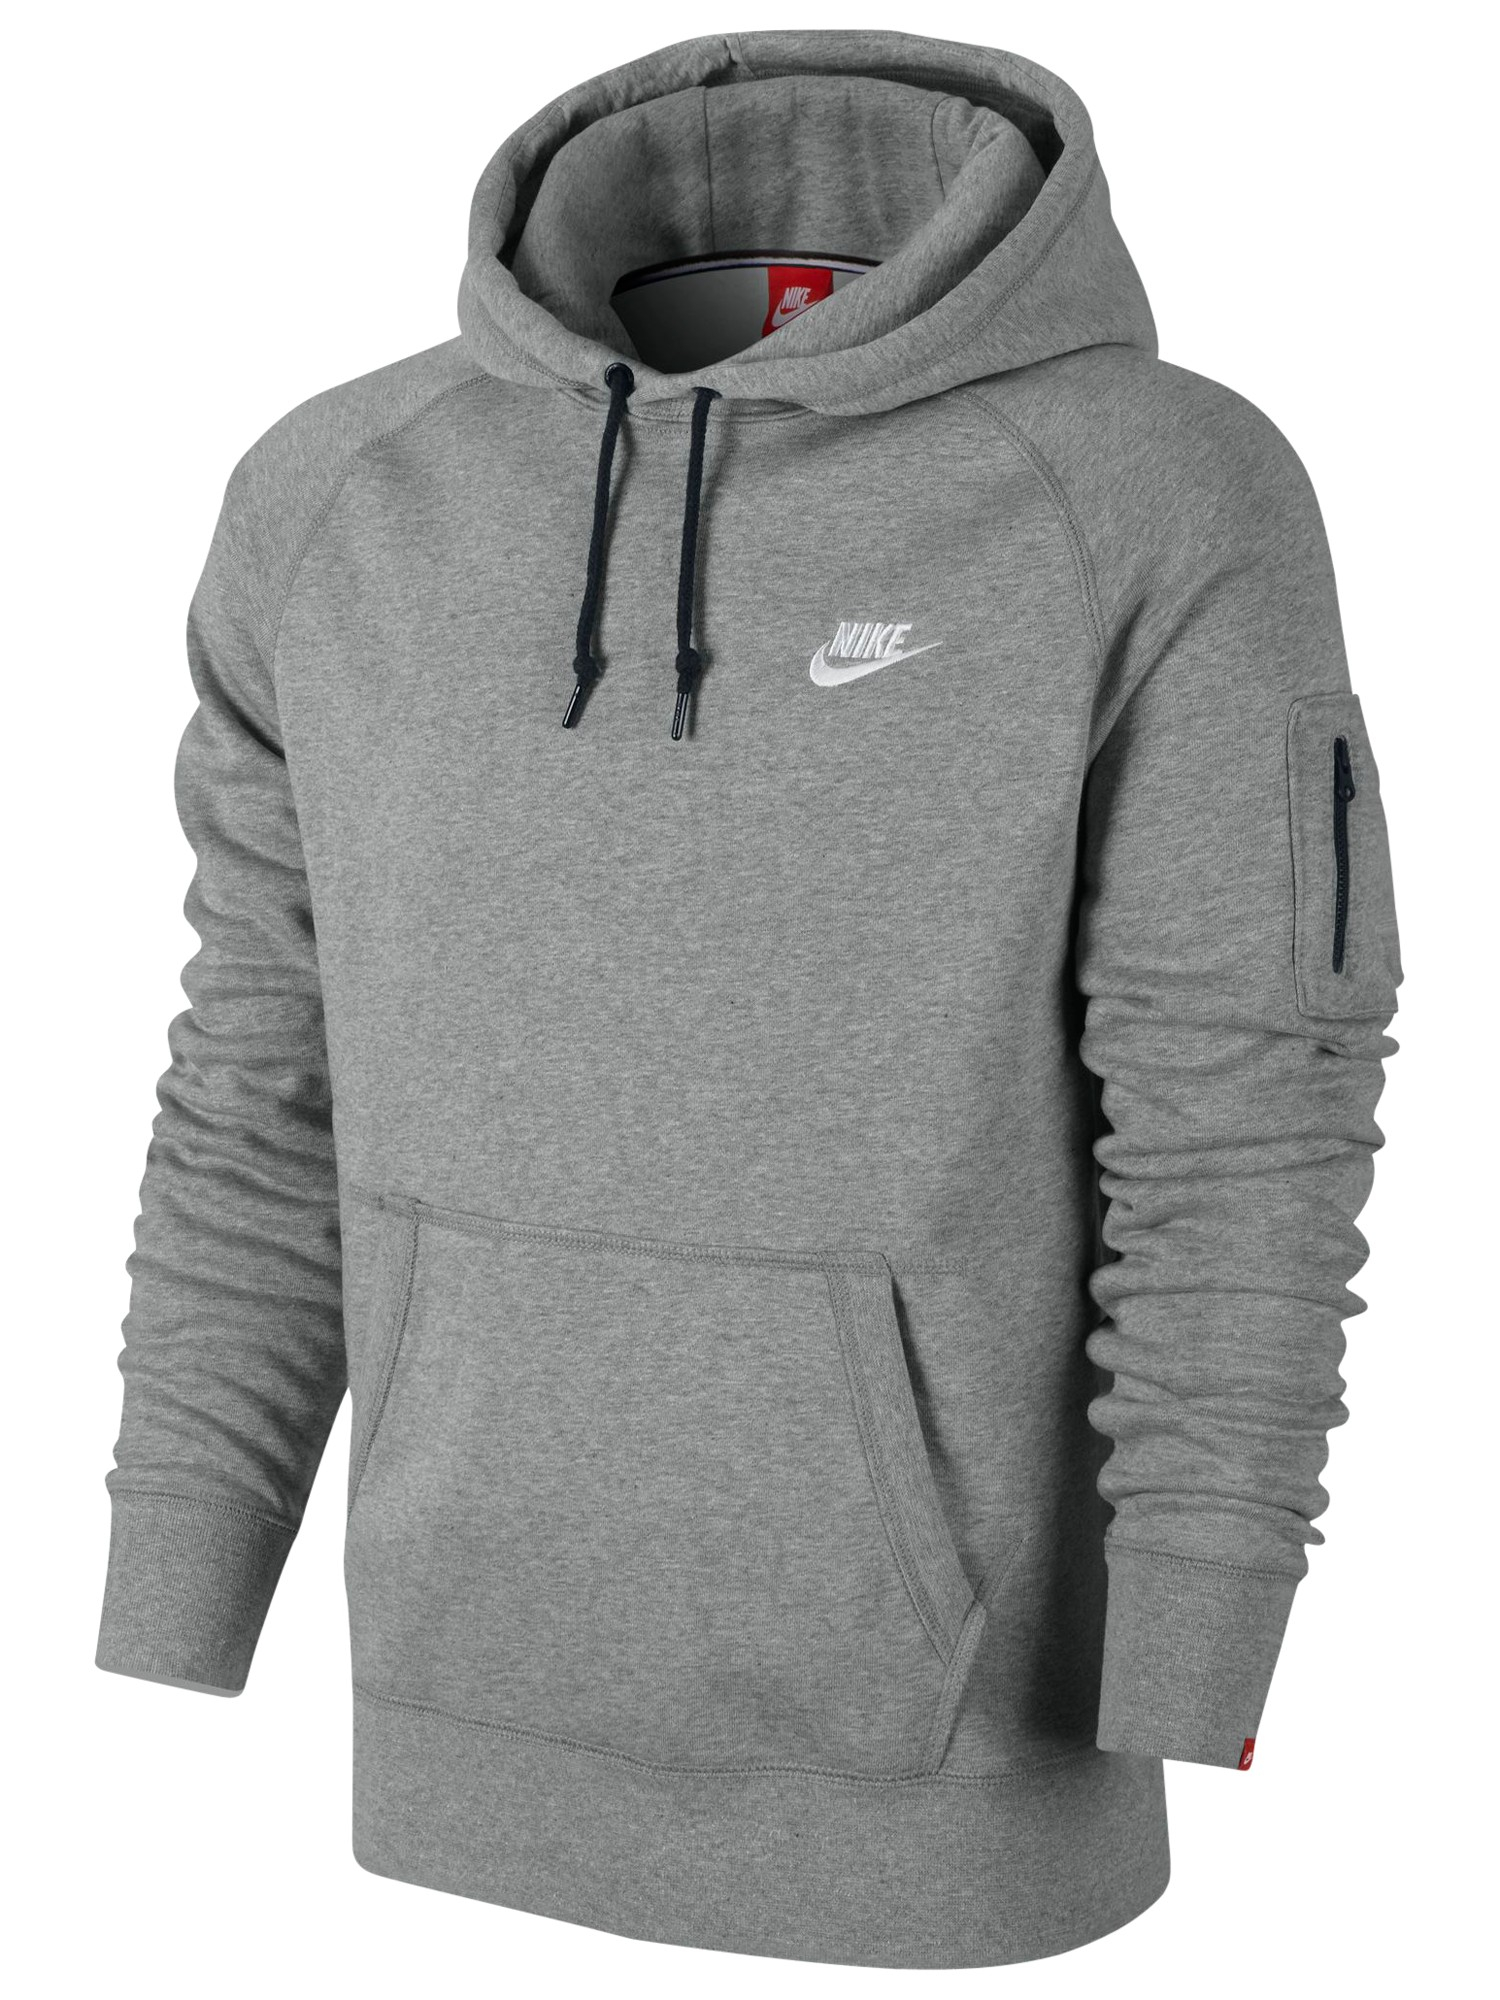 Nike Aw77 Fleece Hoodie in Grey for Men | Lyst UK